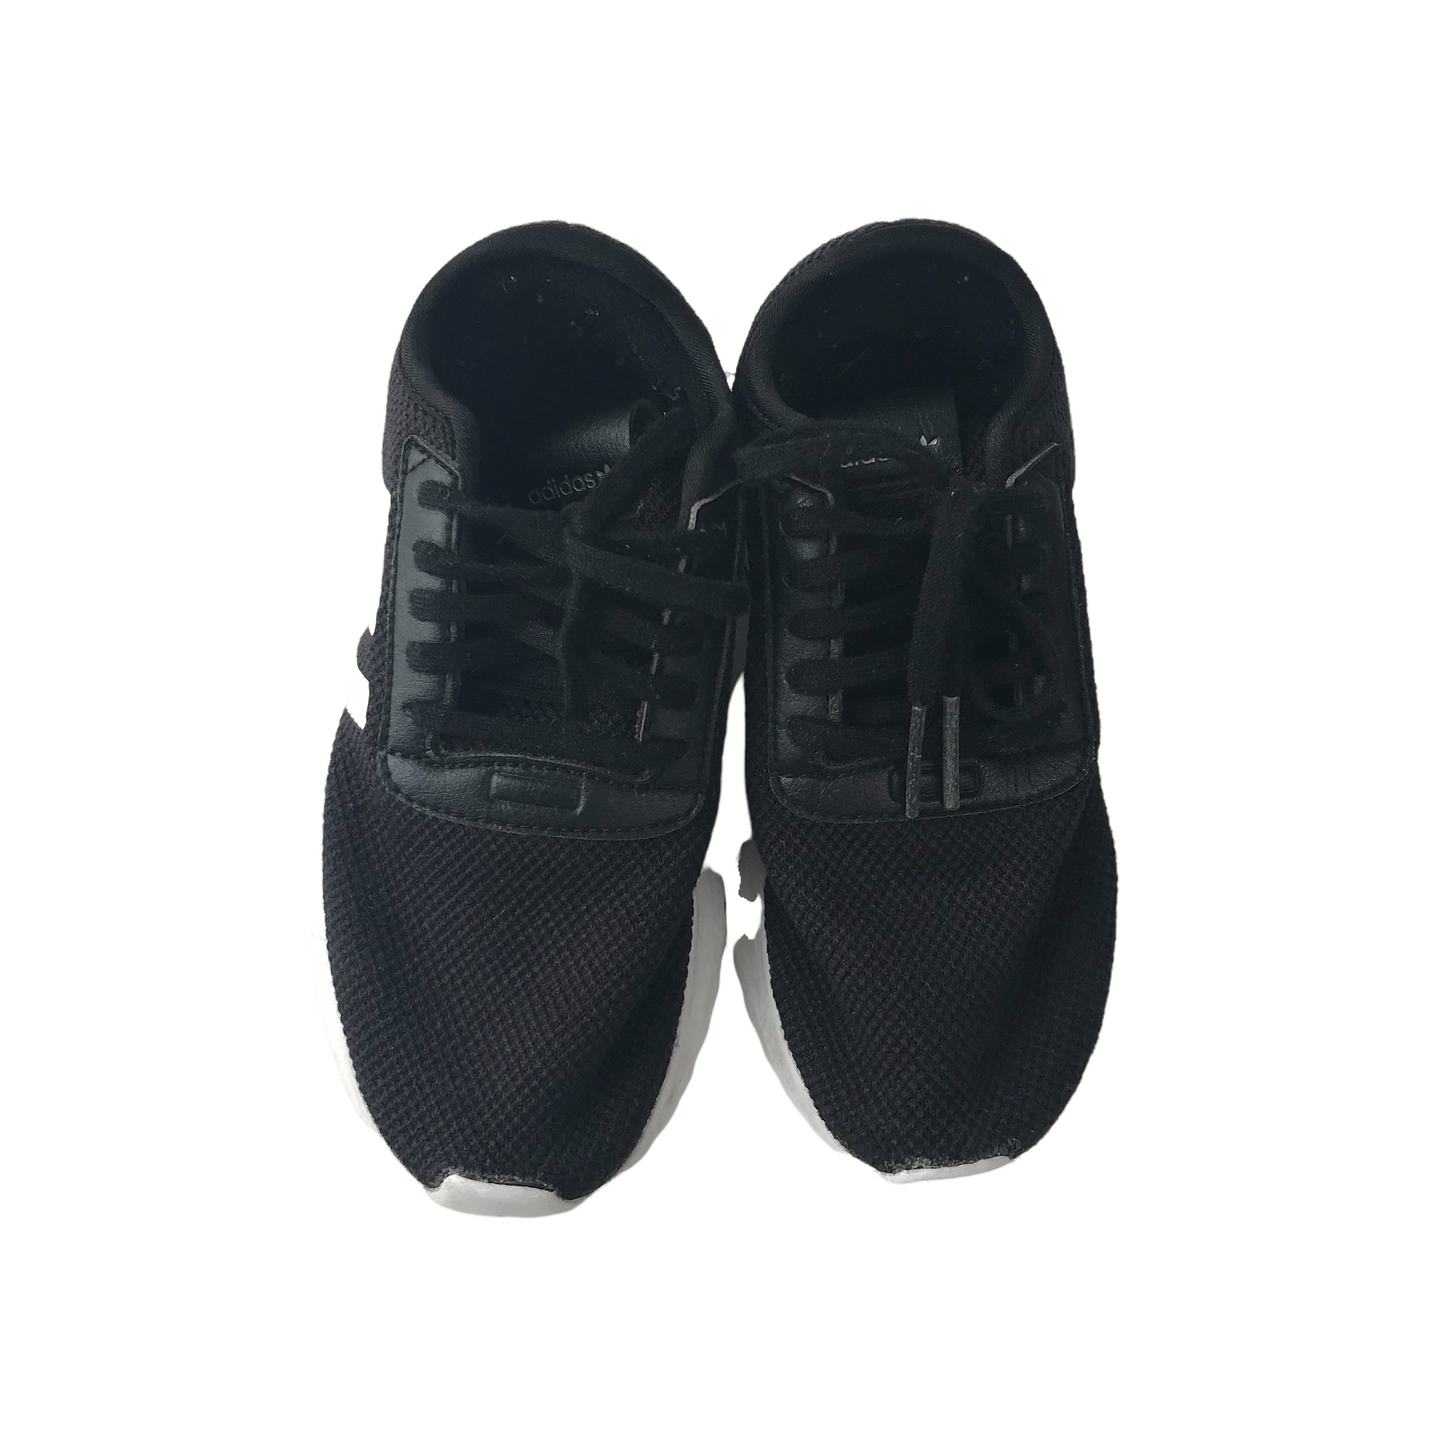 Adidas Black Three Stirpes Trainers UK size 12K junior